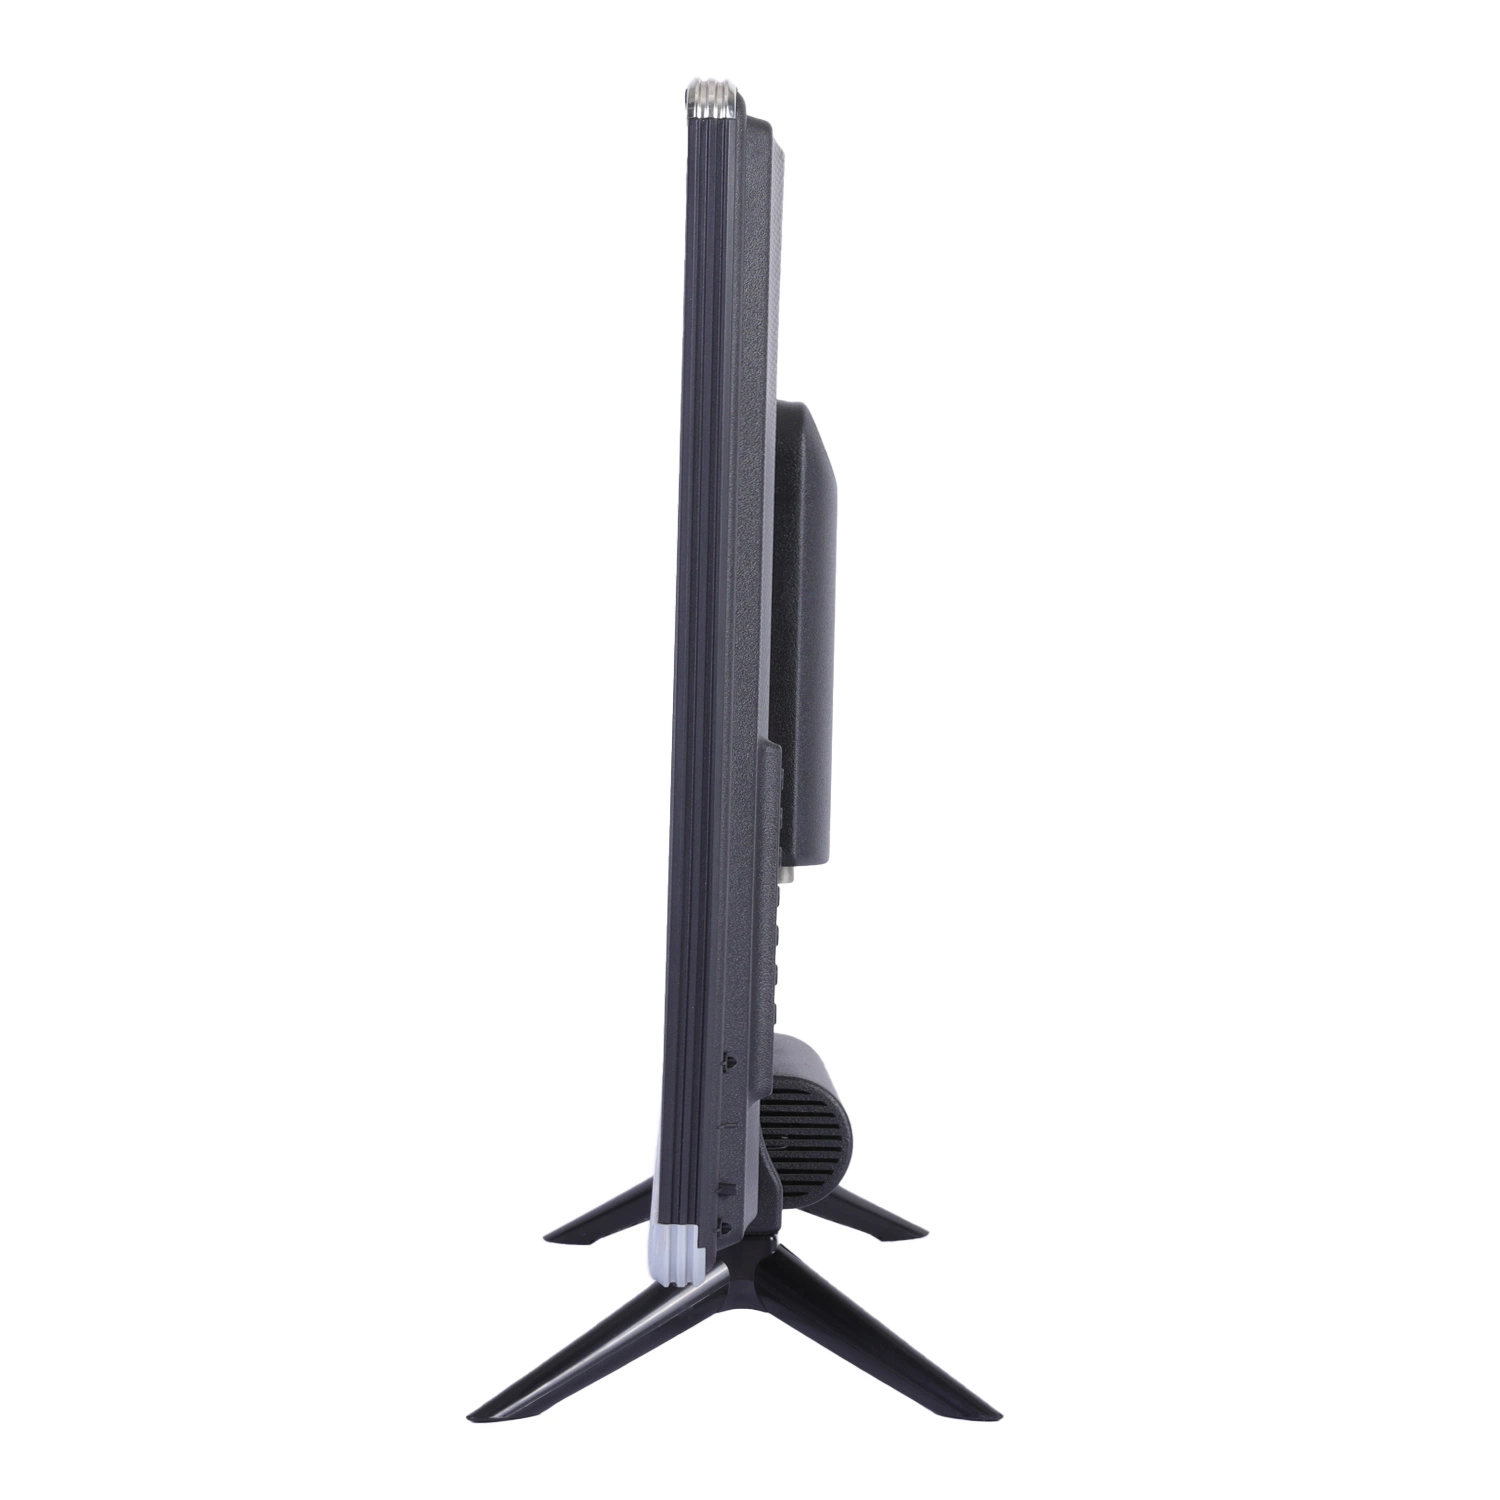 Custom 55 Inch TV LED téléviseur intelligent pour la vente de la télévision téléviseur intelligent